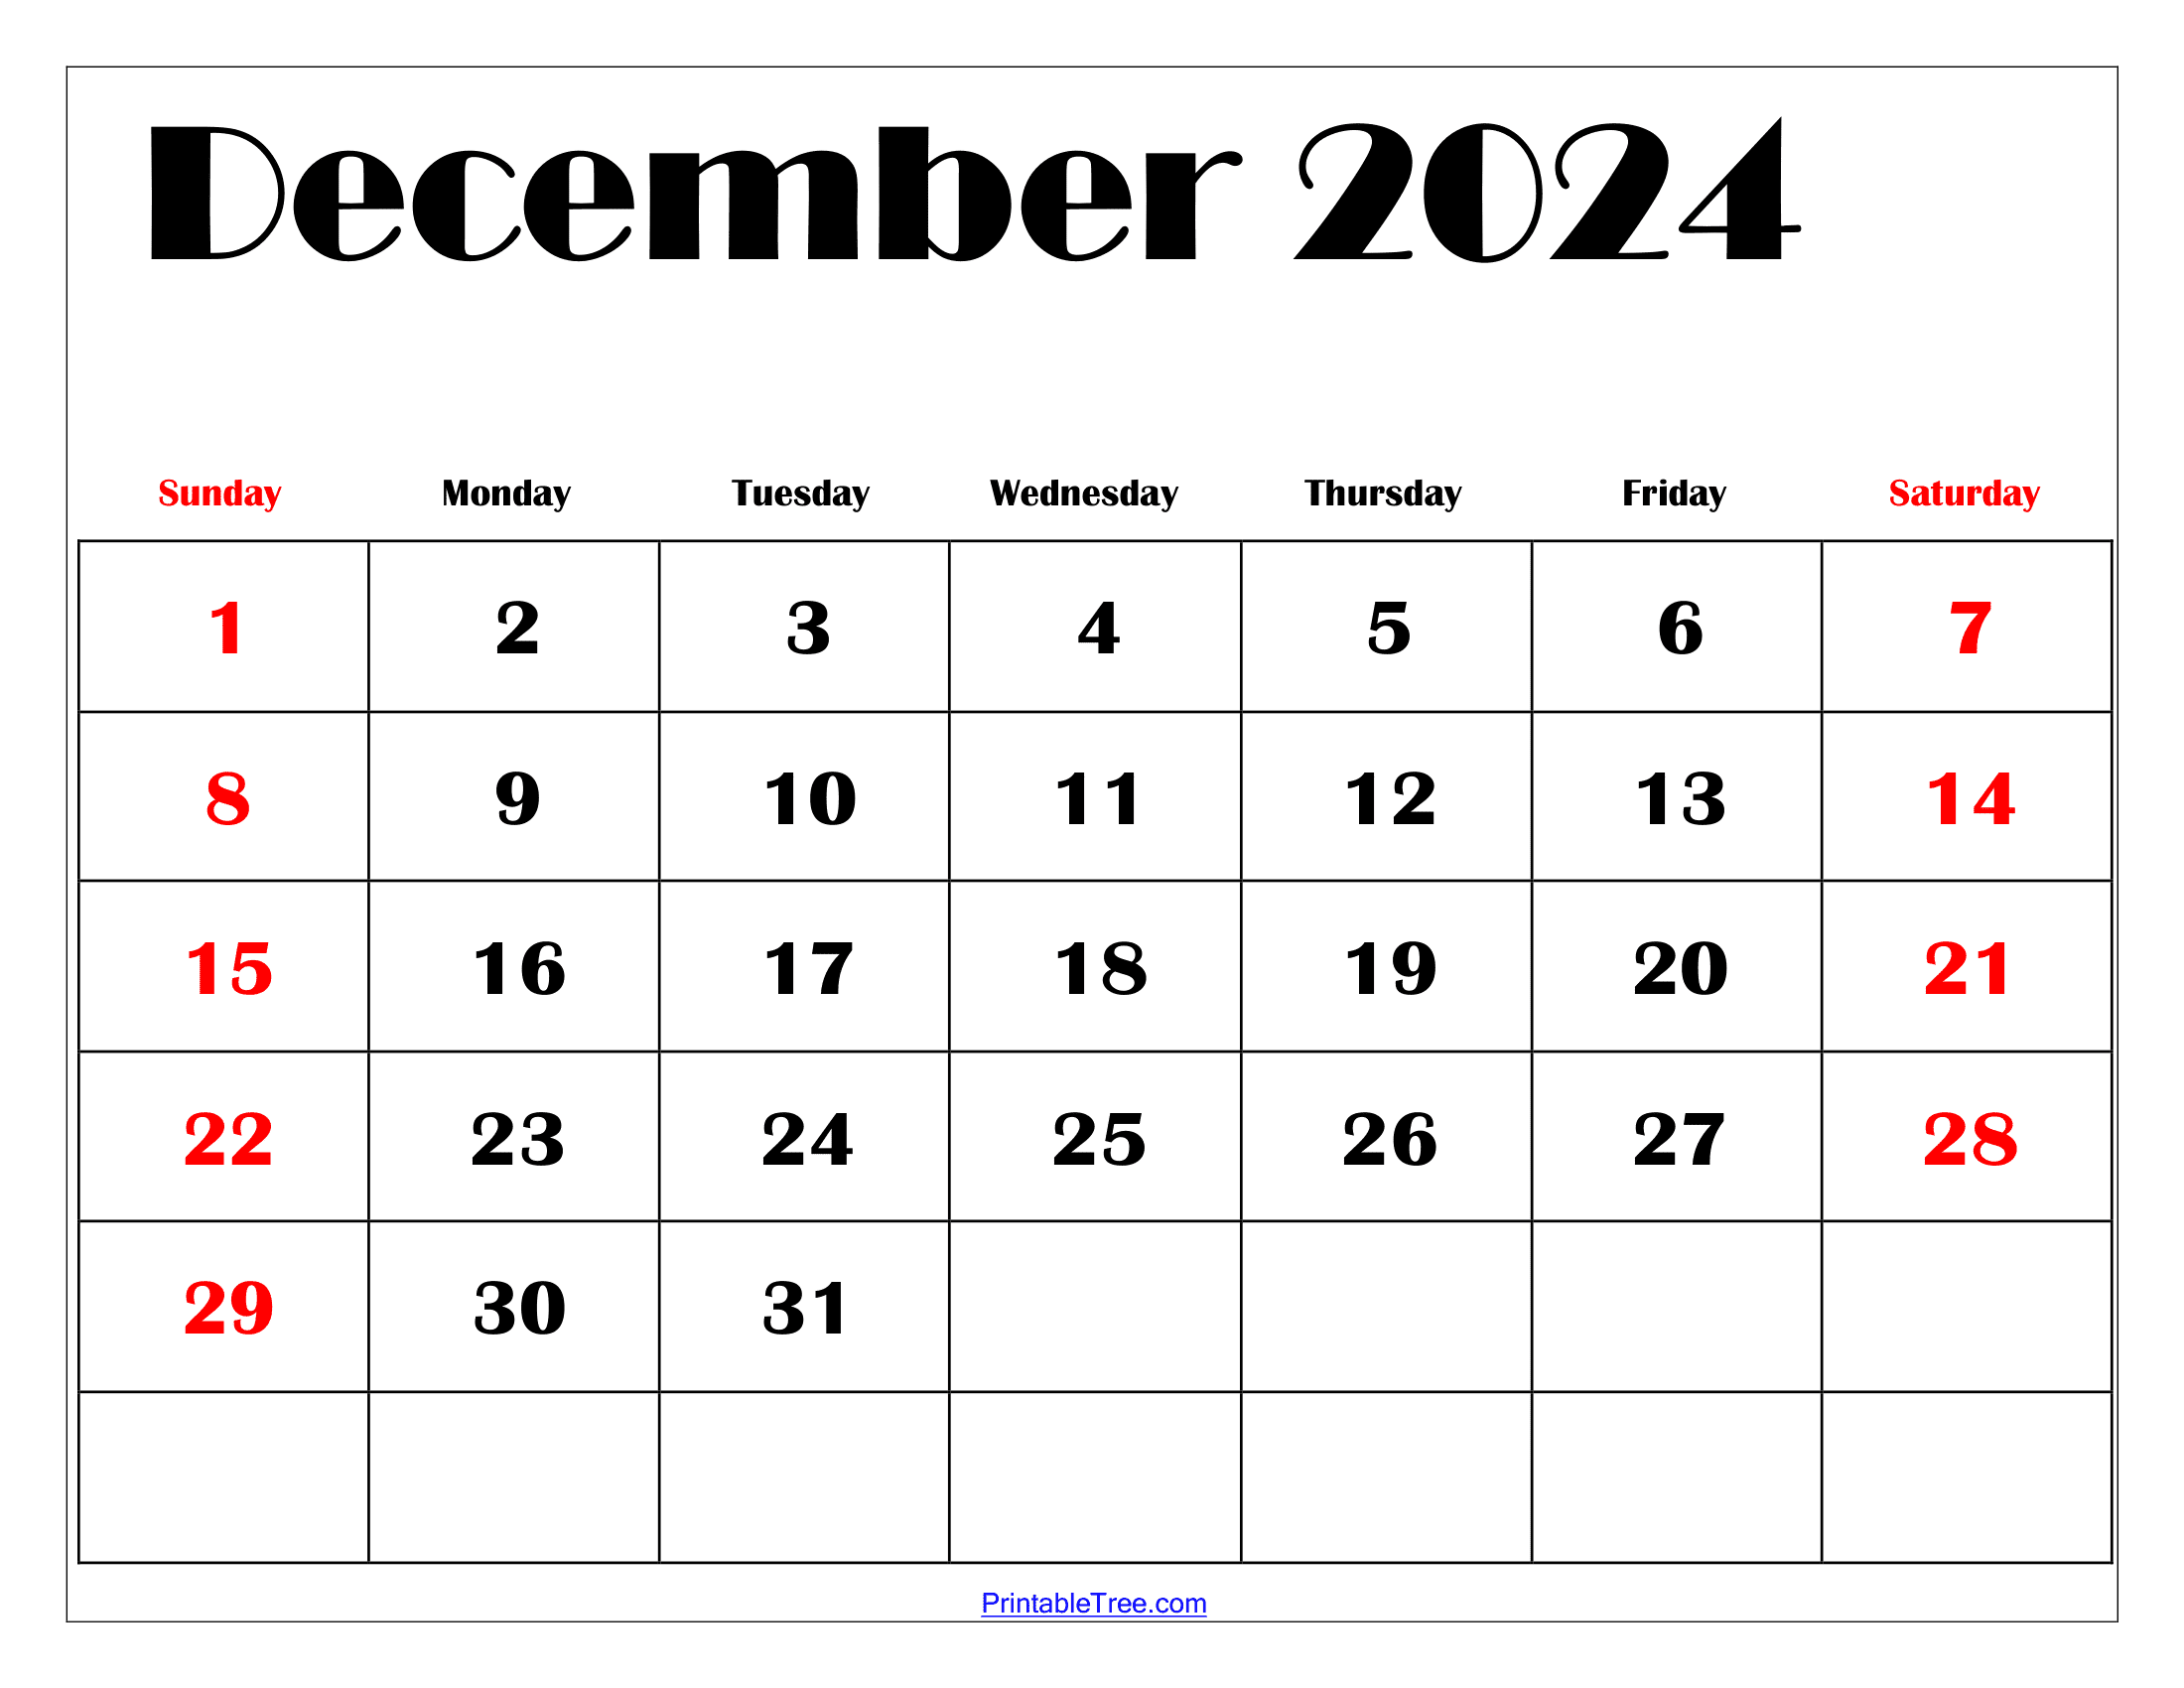 December 2024 Calendar Printable Pdf Blank Free Templates with Free Printable Appointment Calendar December 2024